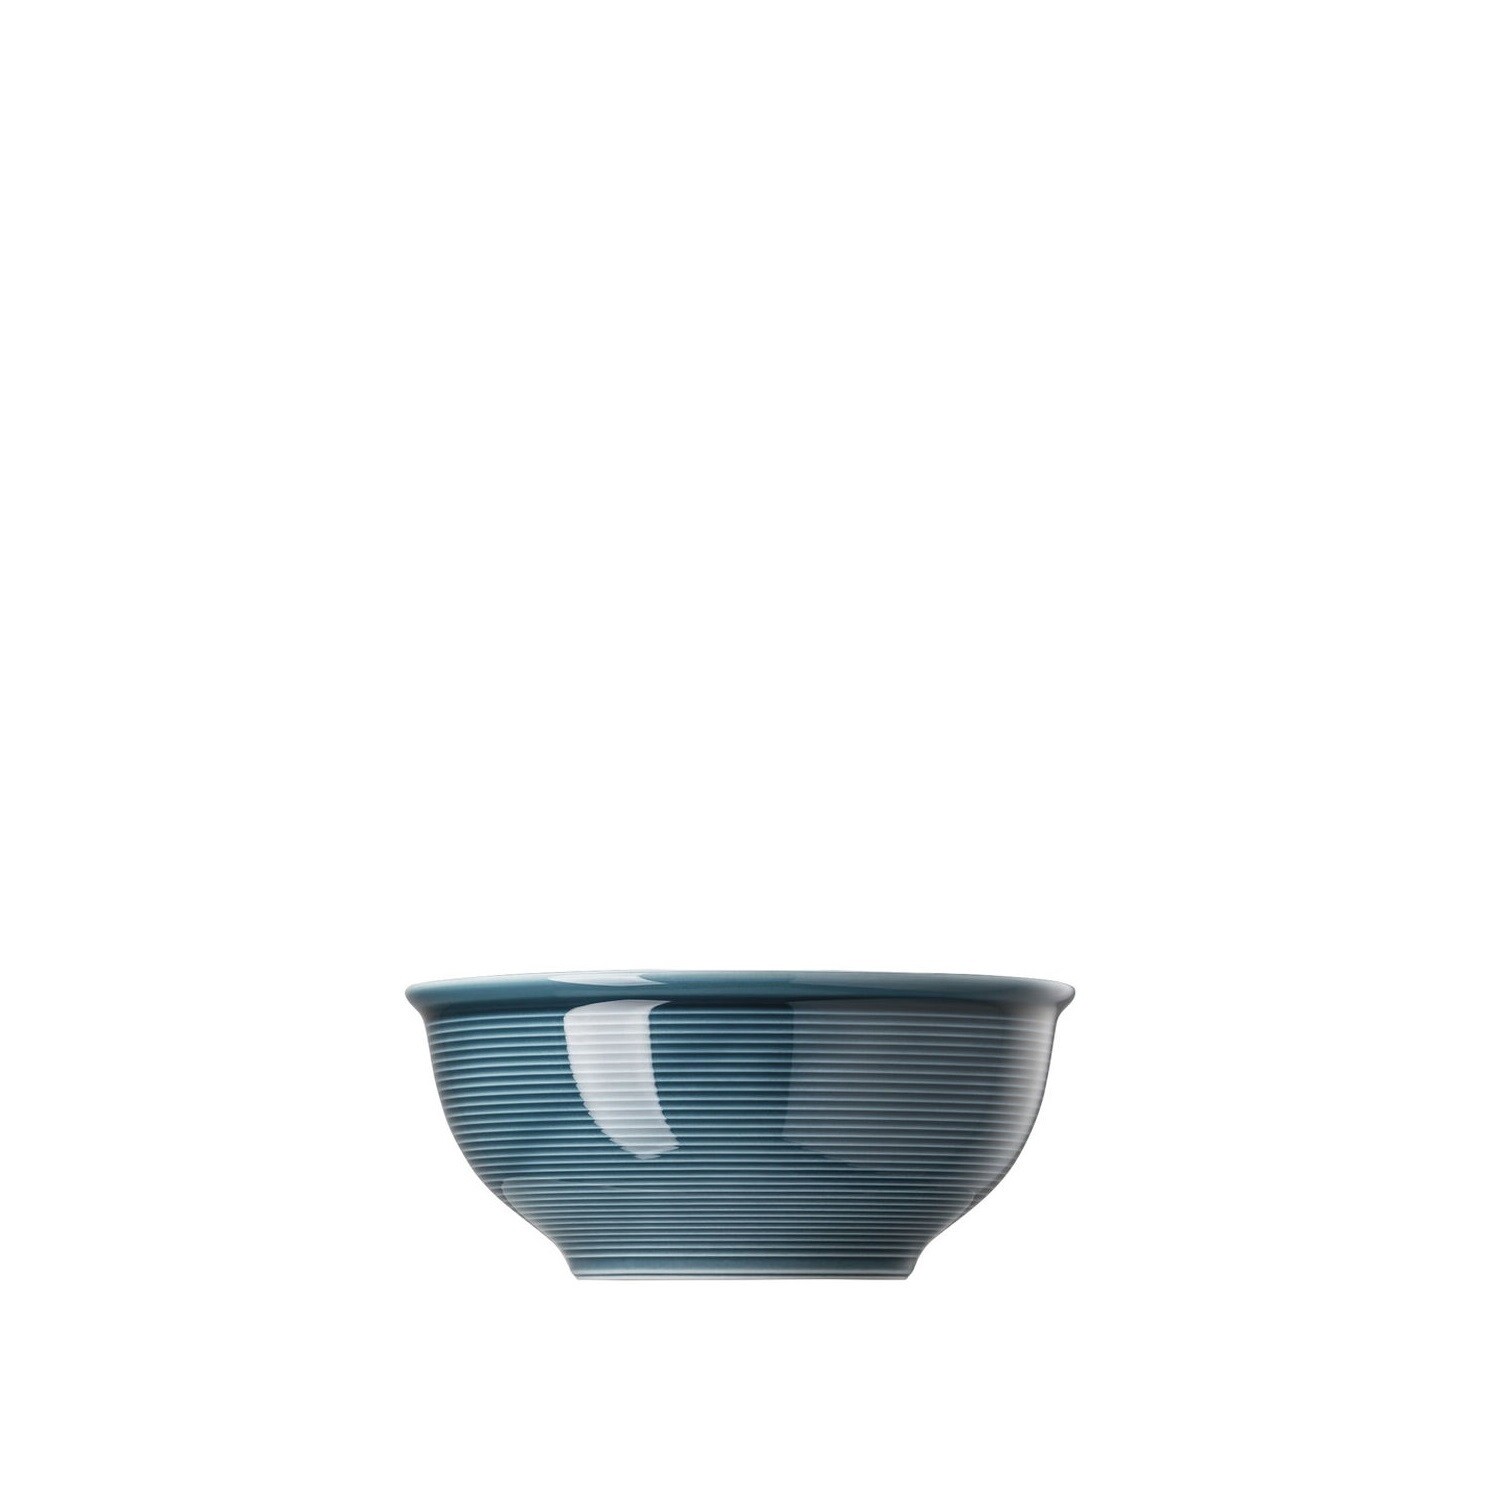 THOMAS 'trend' bowl 17cm night blue  PROMO 19,50 -20%